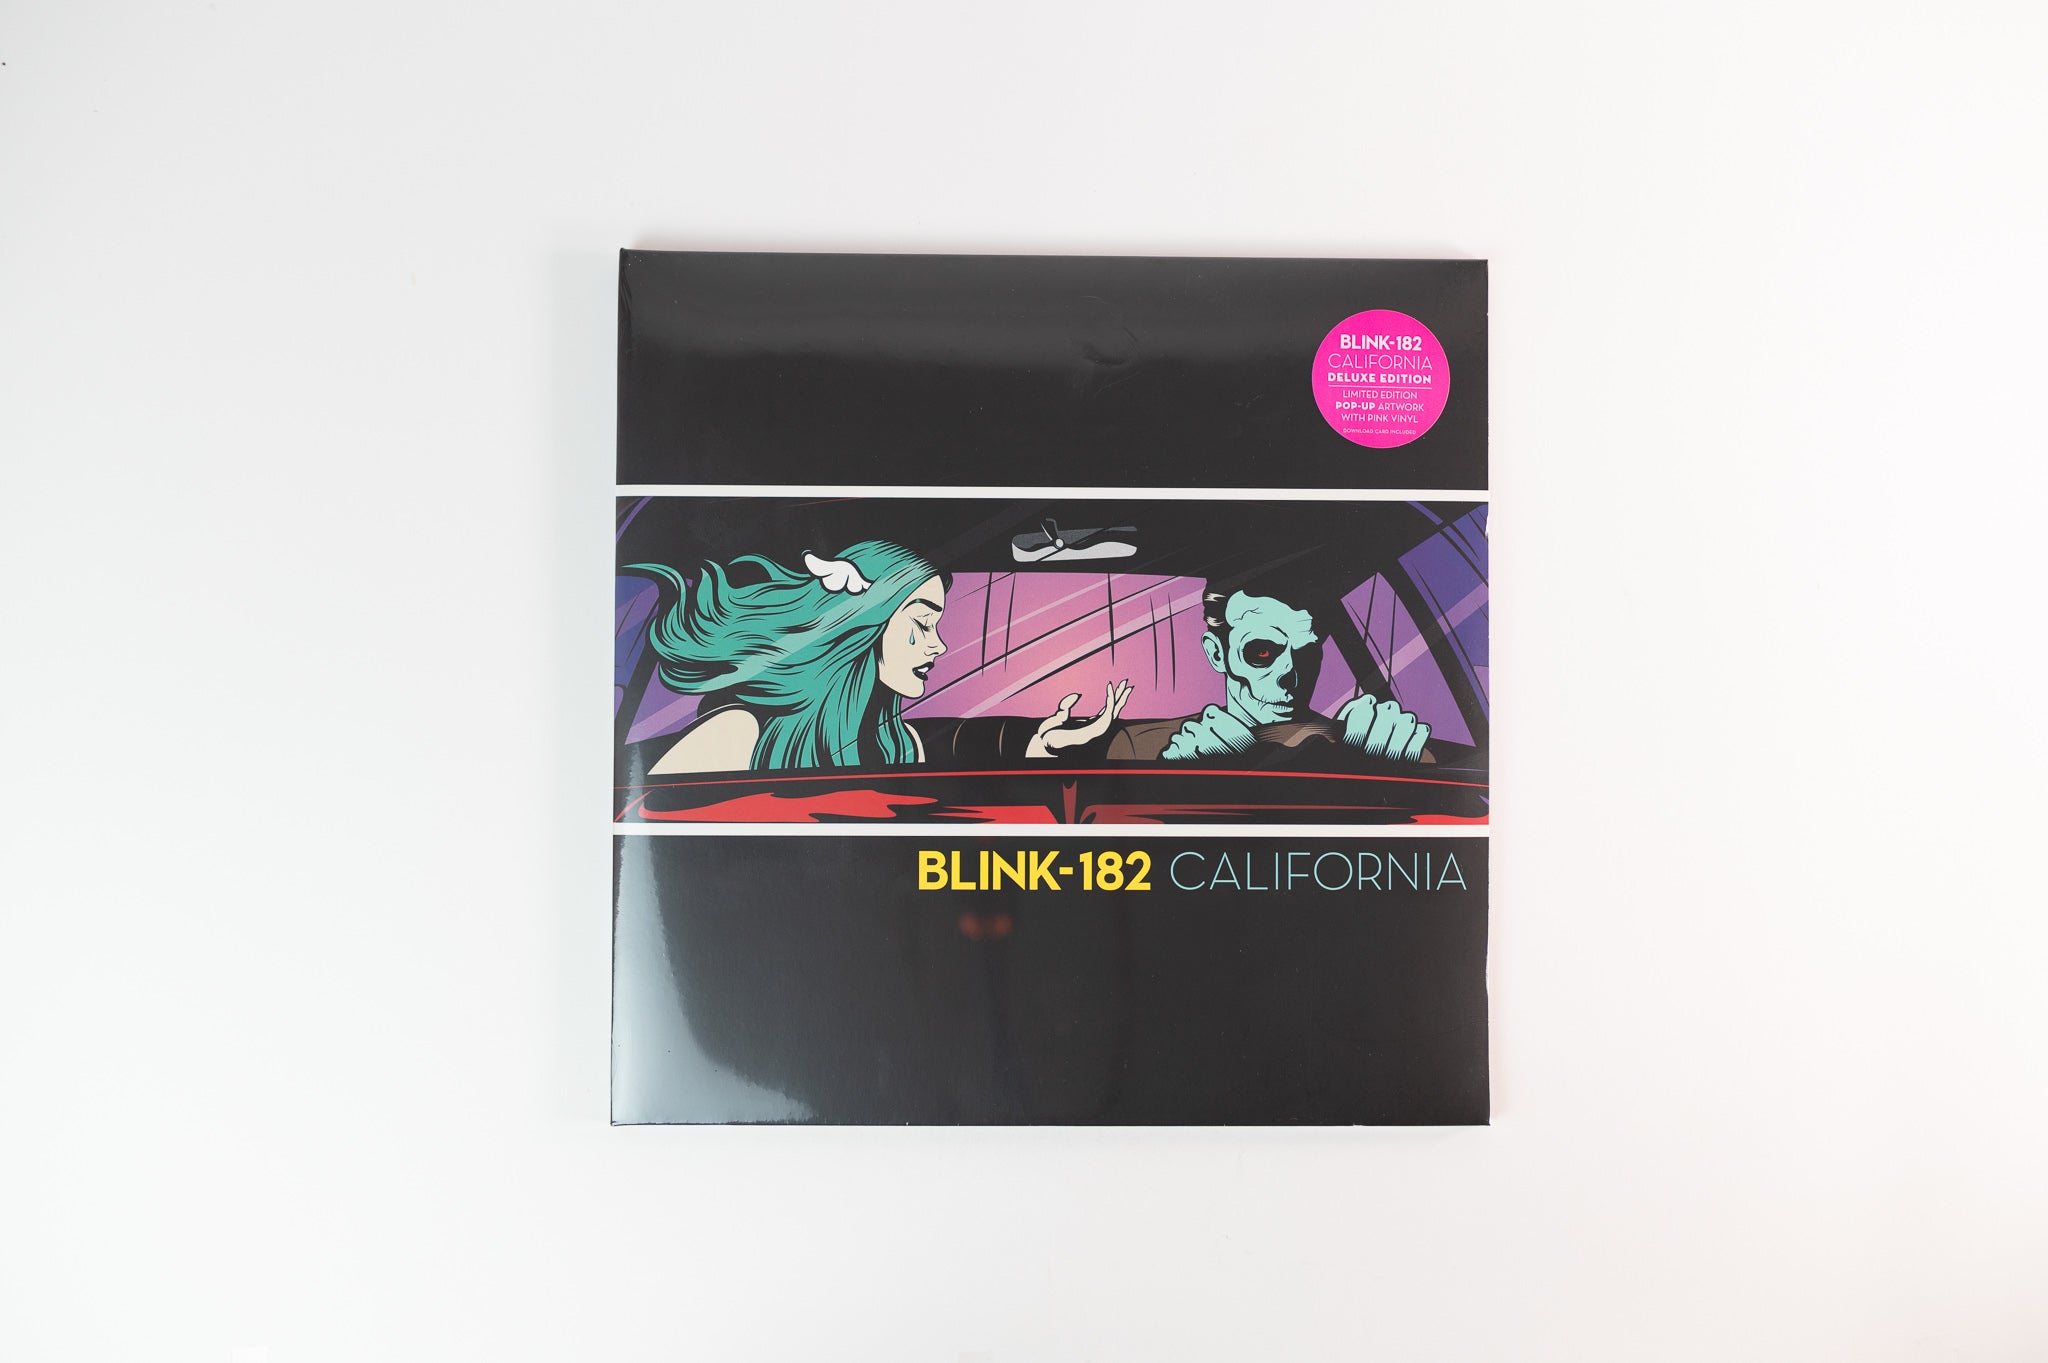 Blink-182 - California on BMG - Deluxe Edition Pink Vinyl w/ slipmat